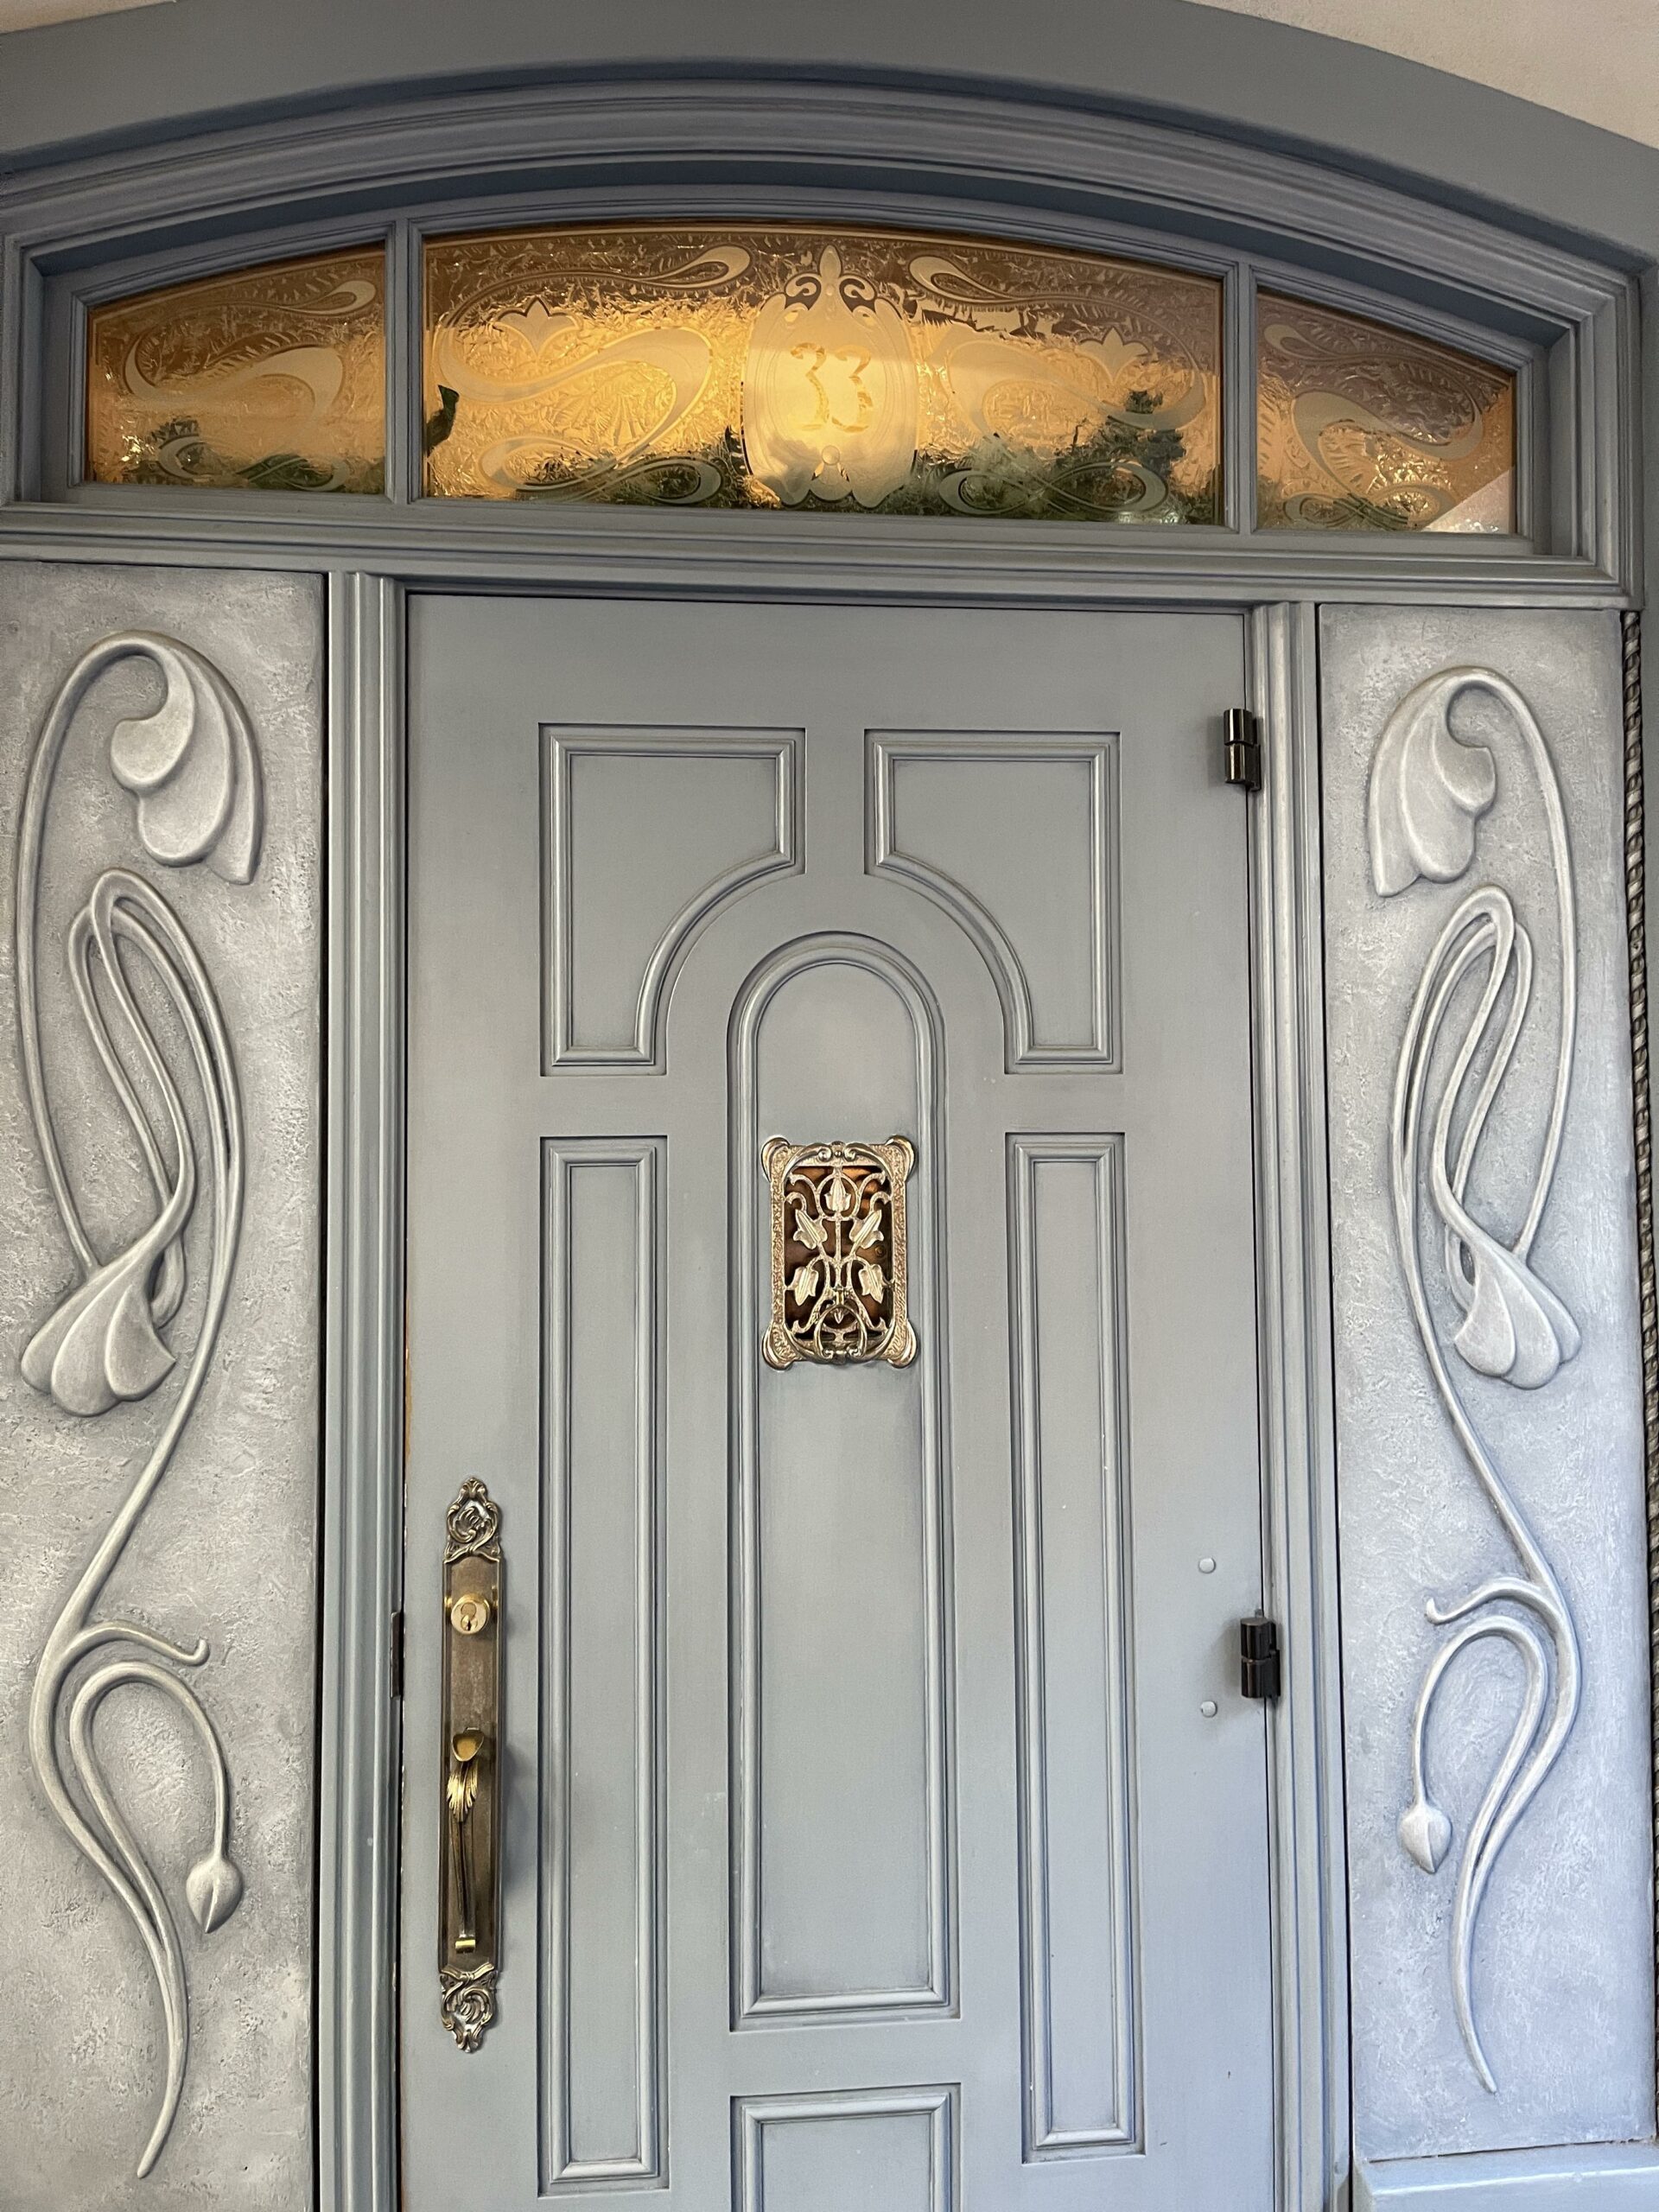 The "secret" entrance door to Club 33.